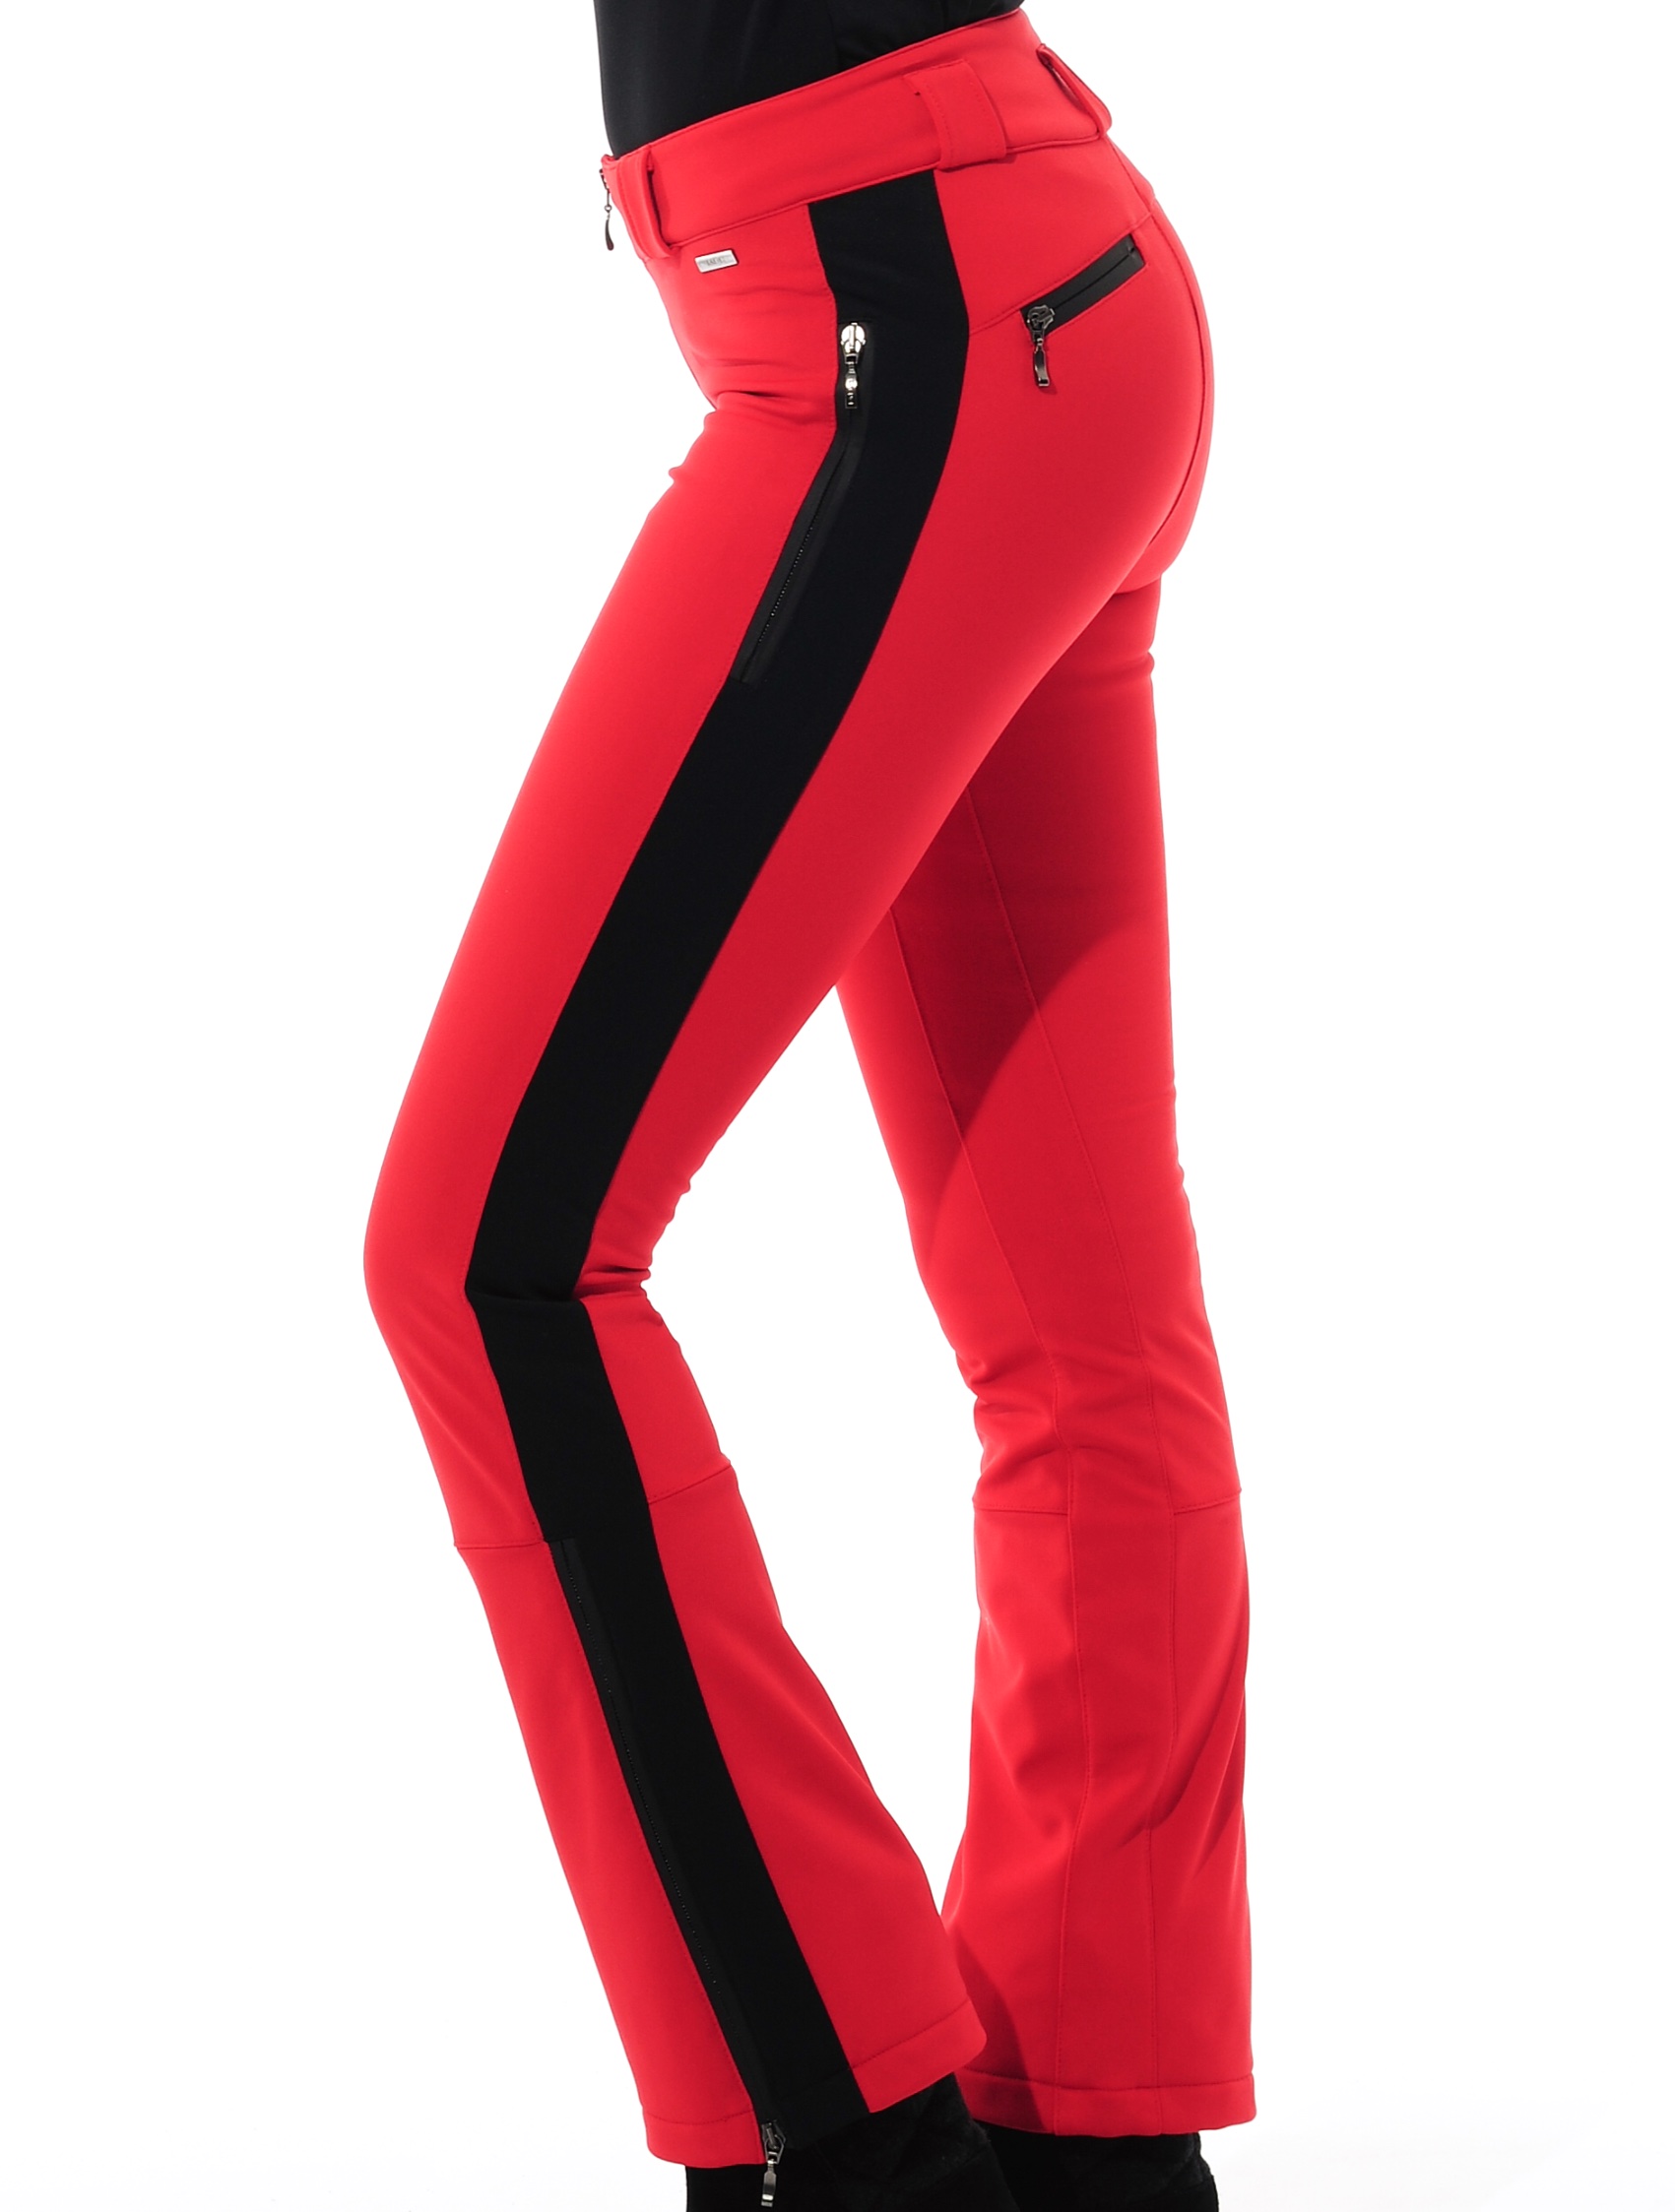 4way stretch jet pants red/black 